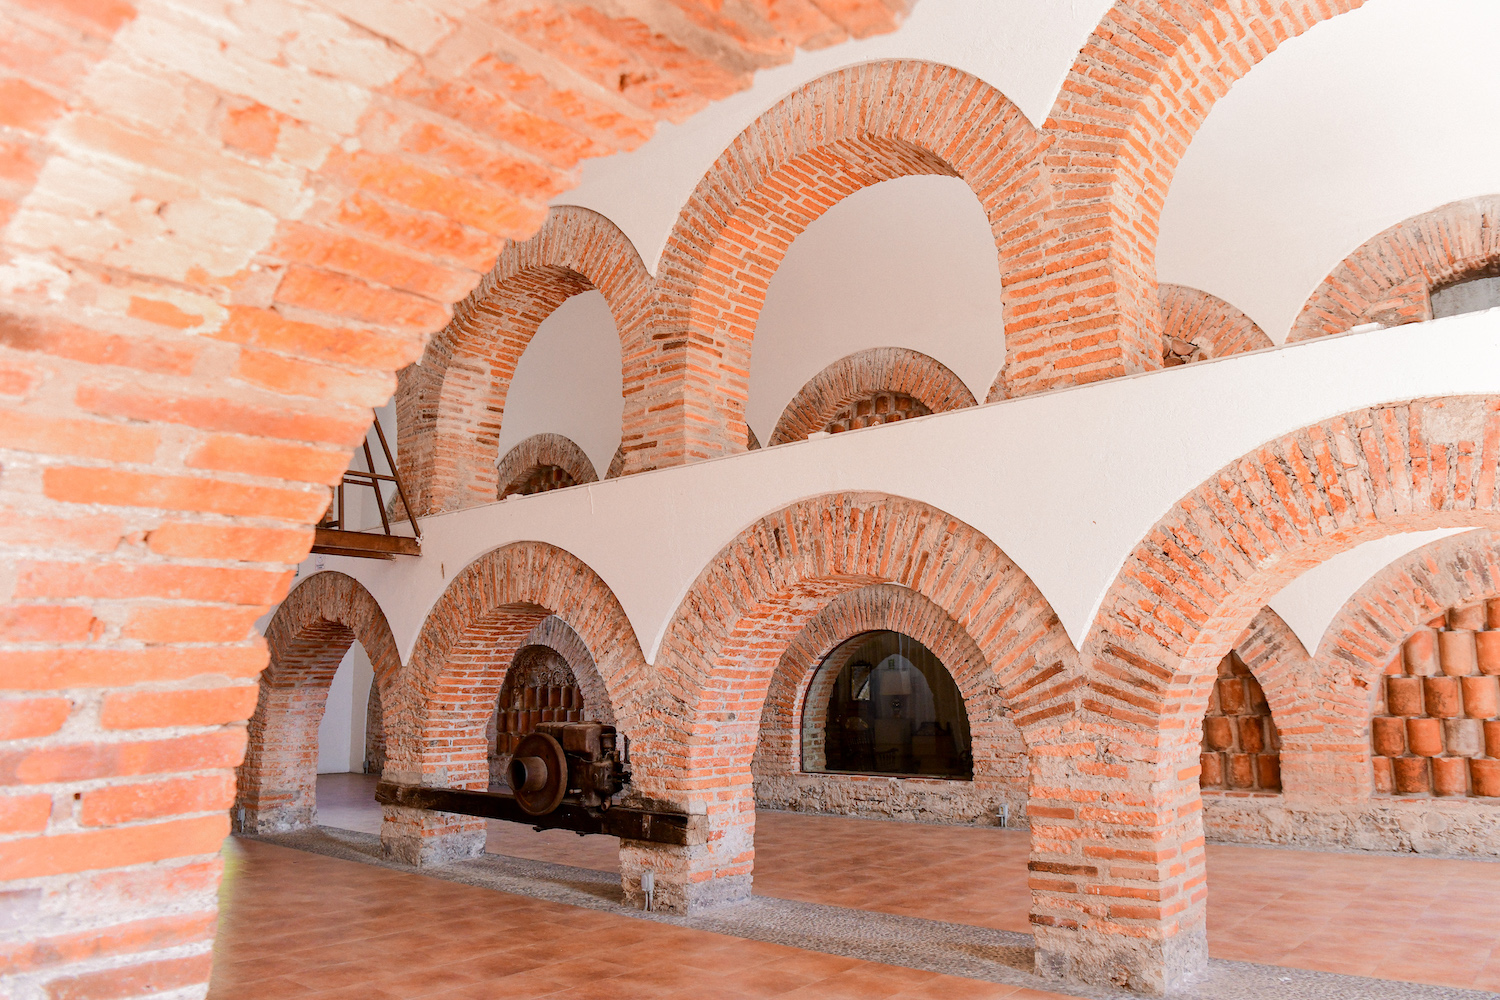 Interior of the Alejandro Rangel Hidalgo University Museum in Comala, Mexico featuring brick arched architecture